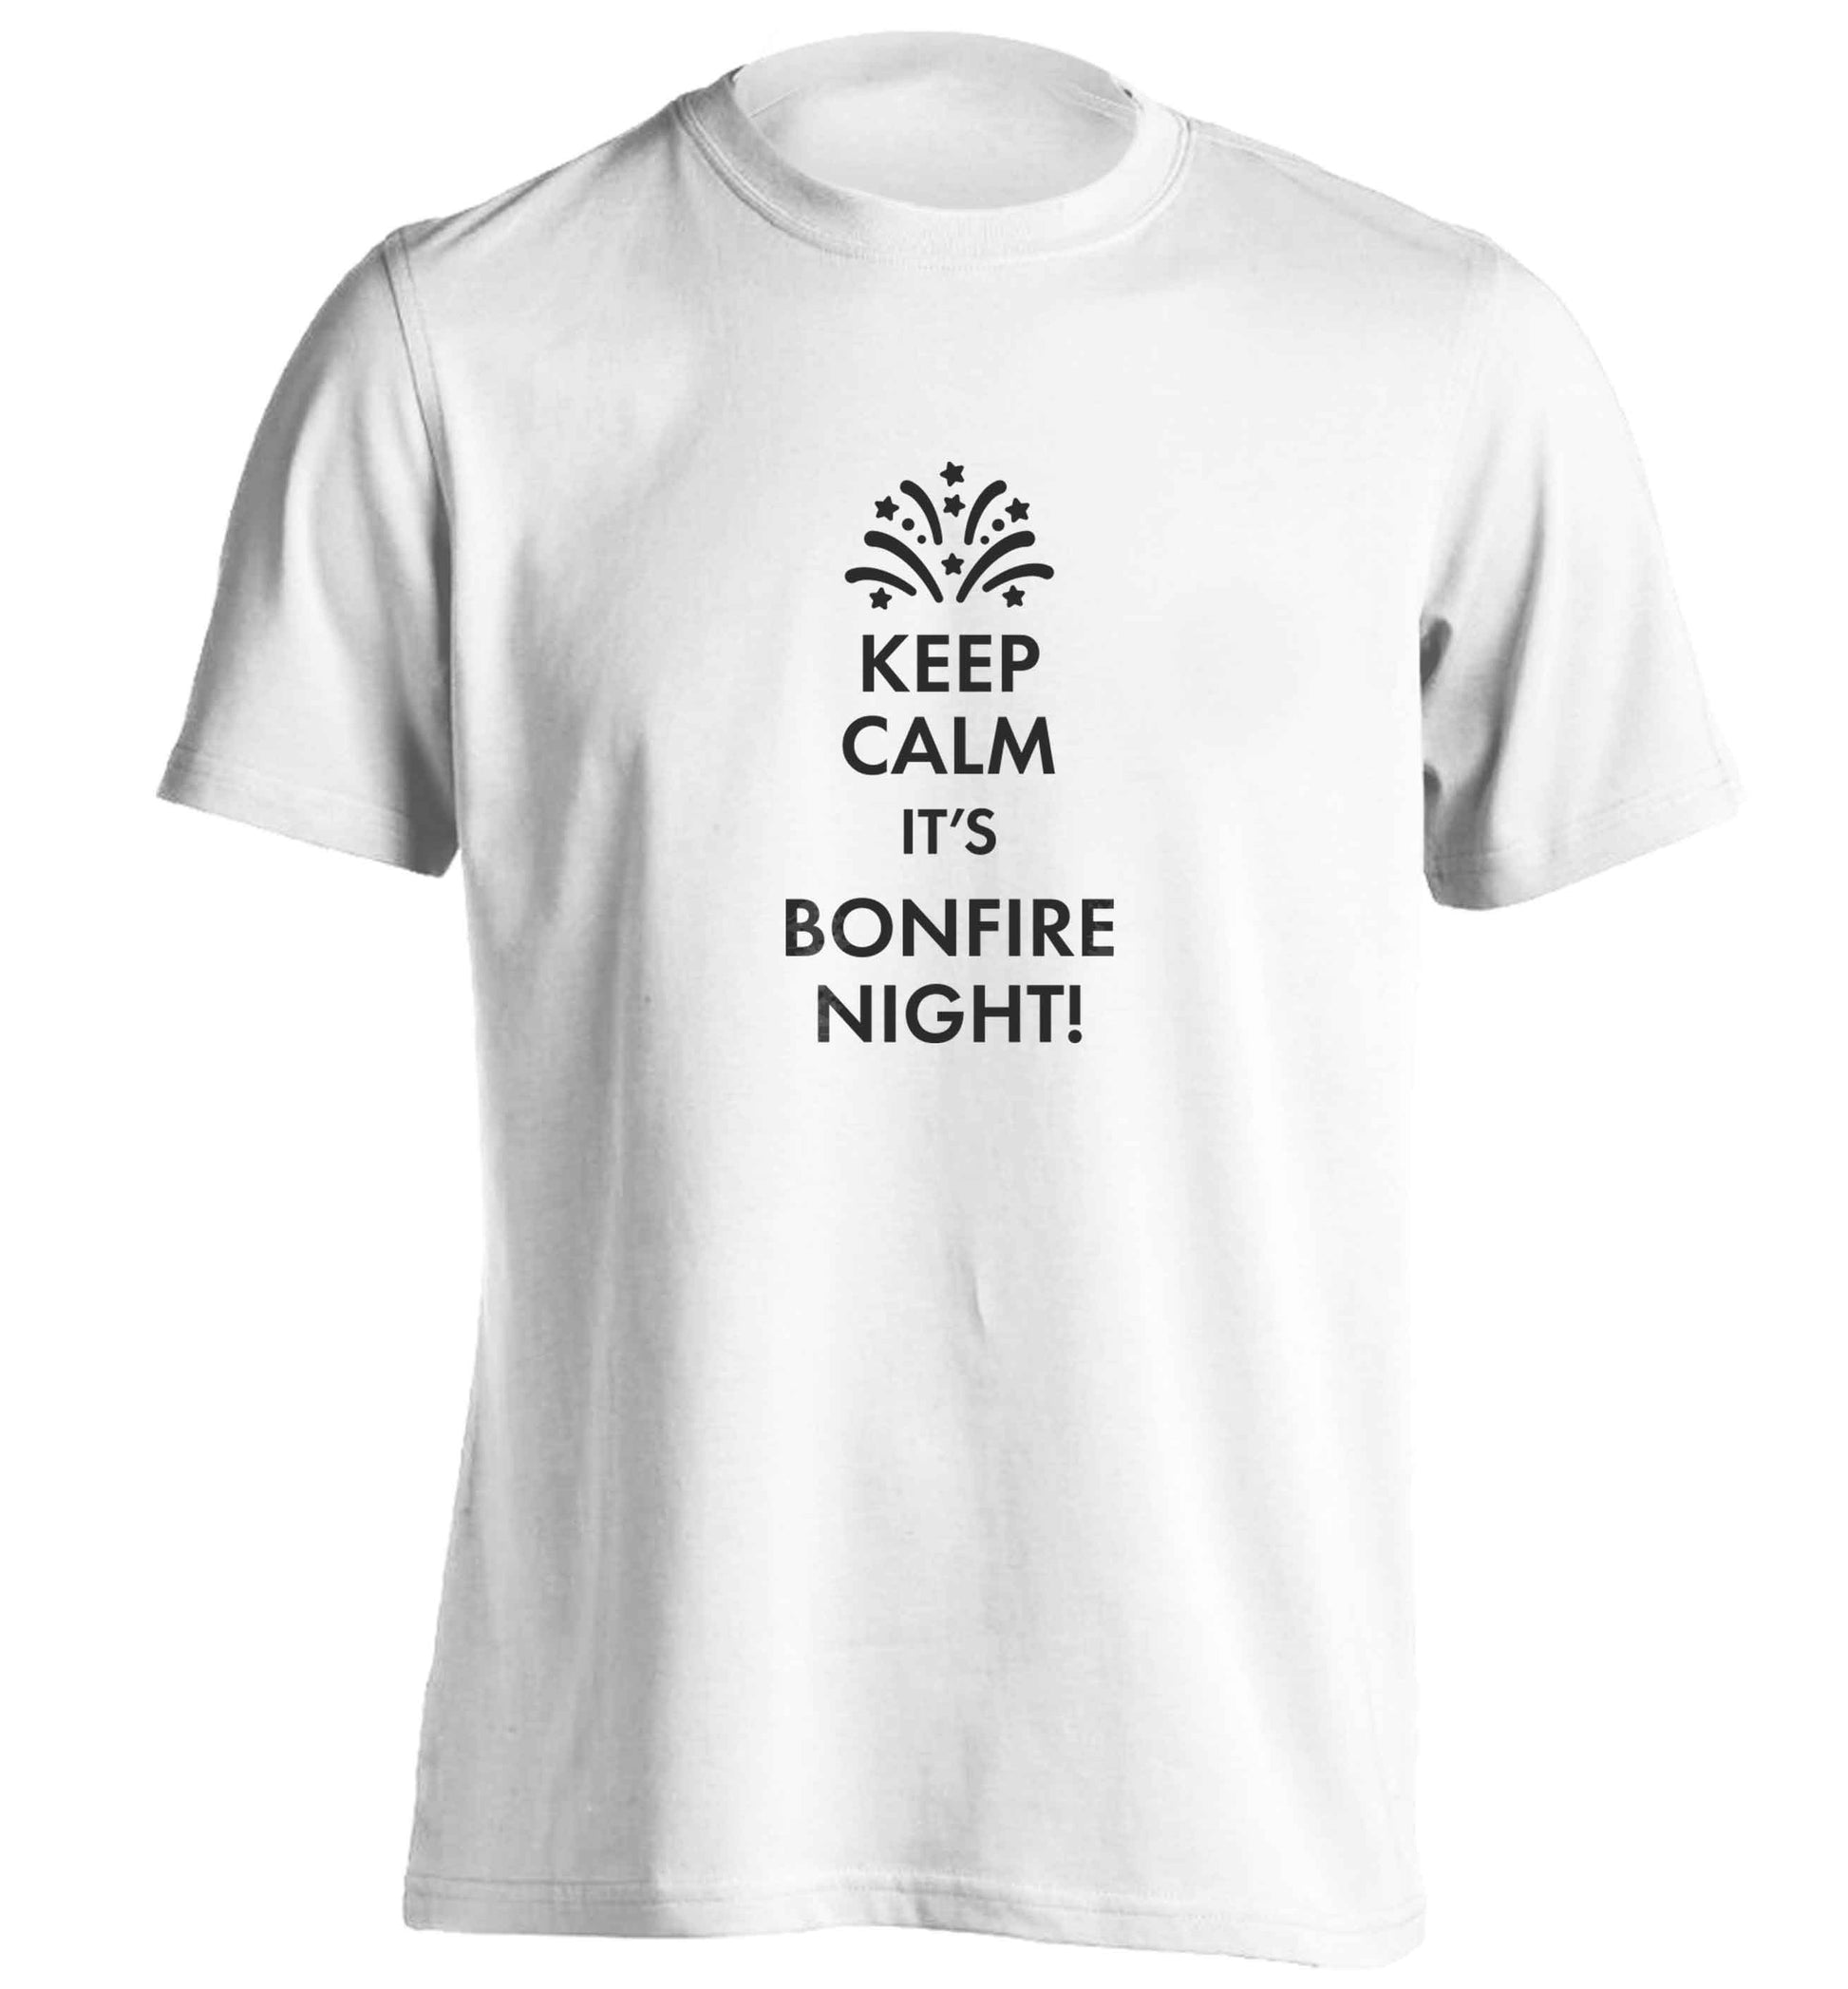 Keep calm its bonfire night adults unisex white Tshirt 2XL